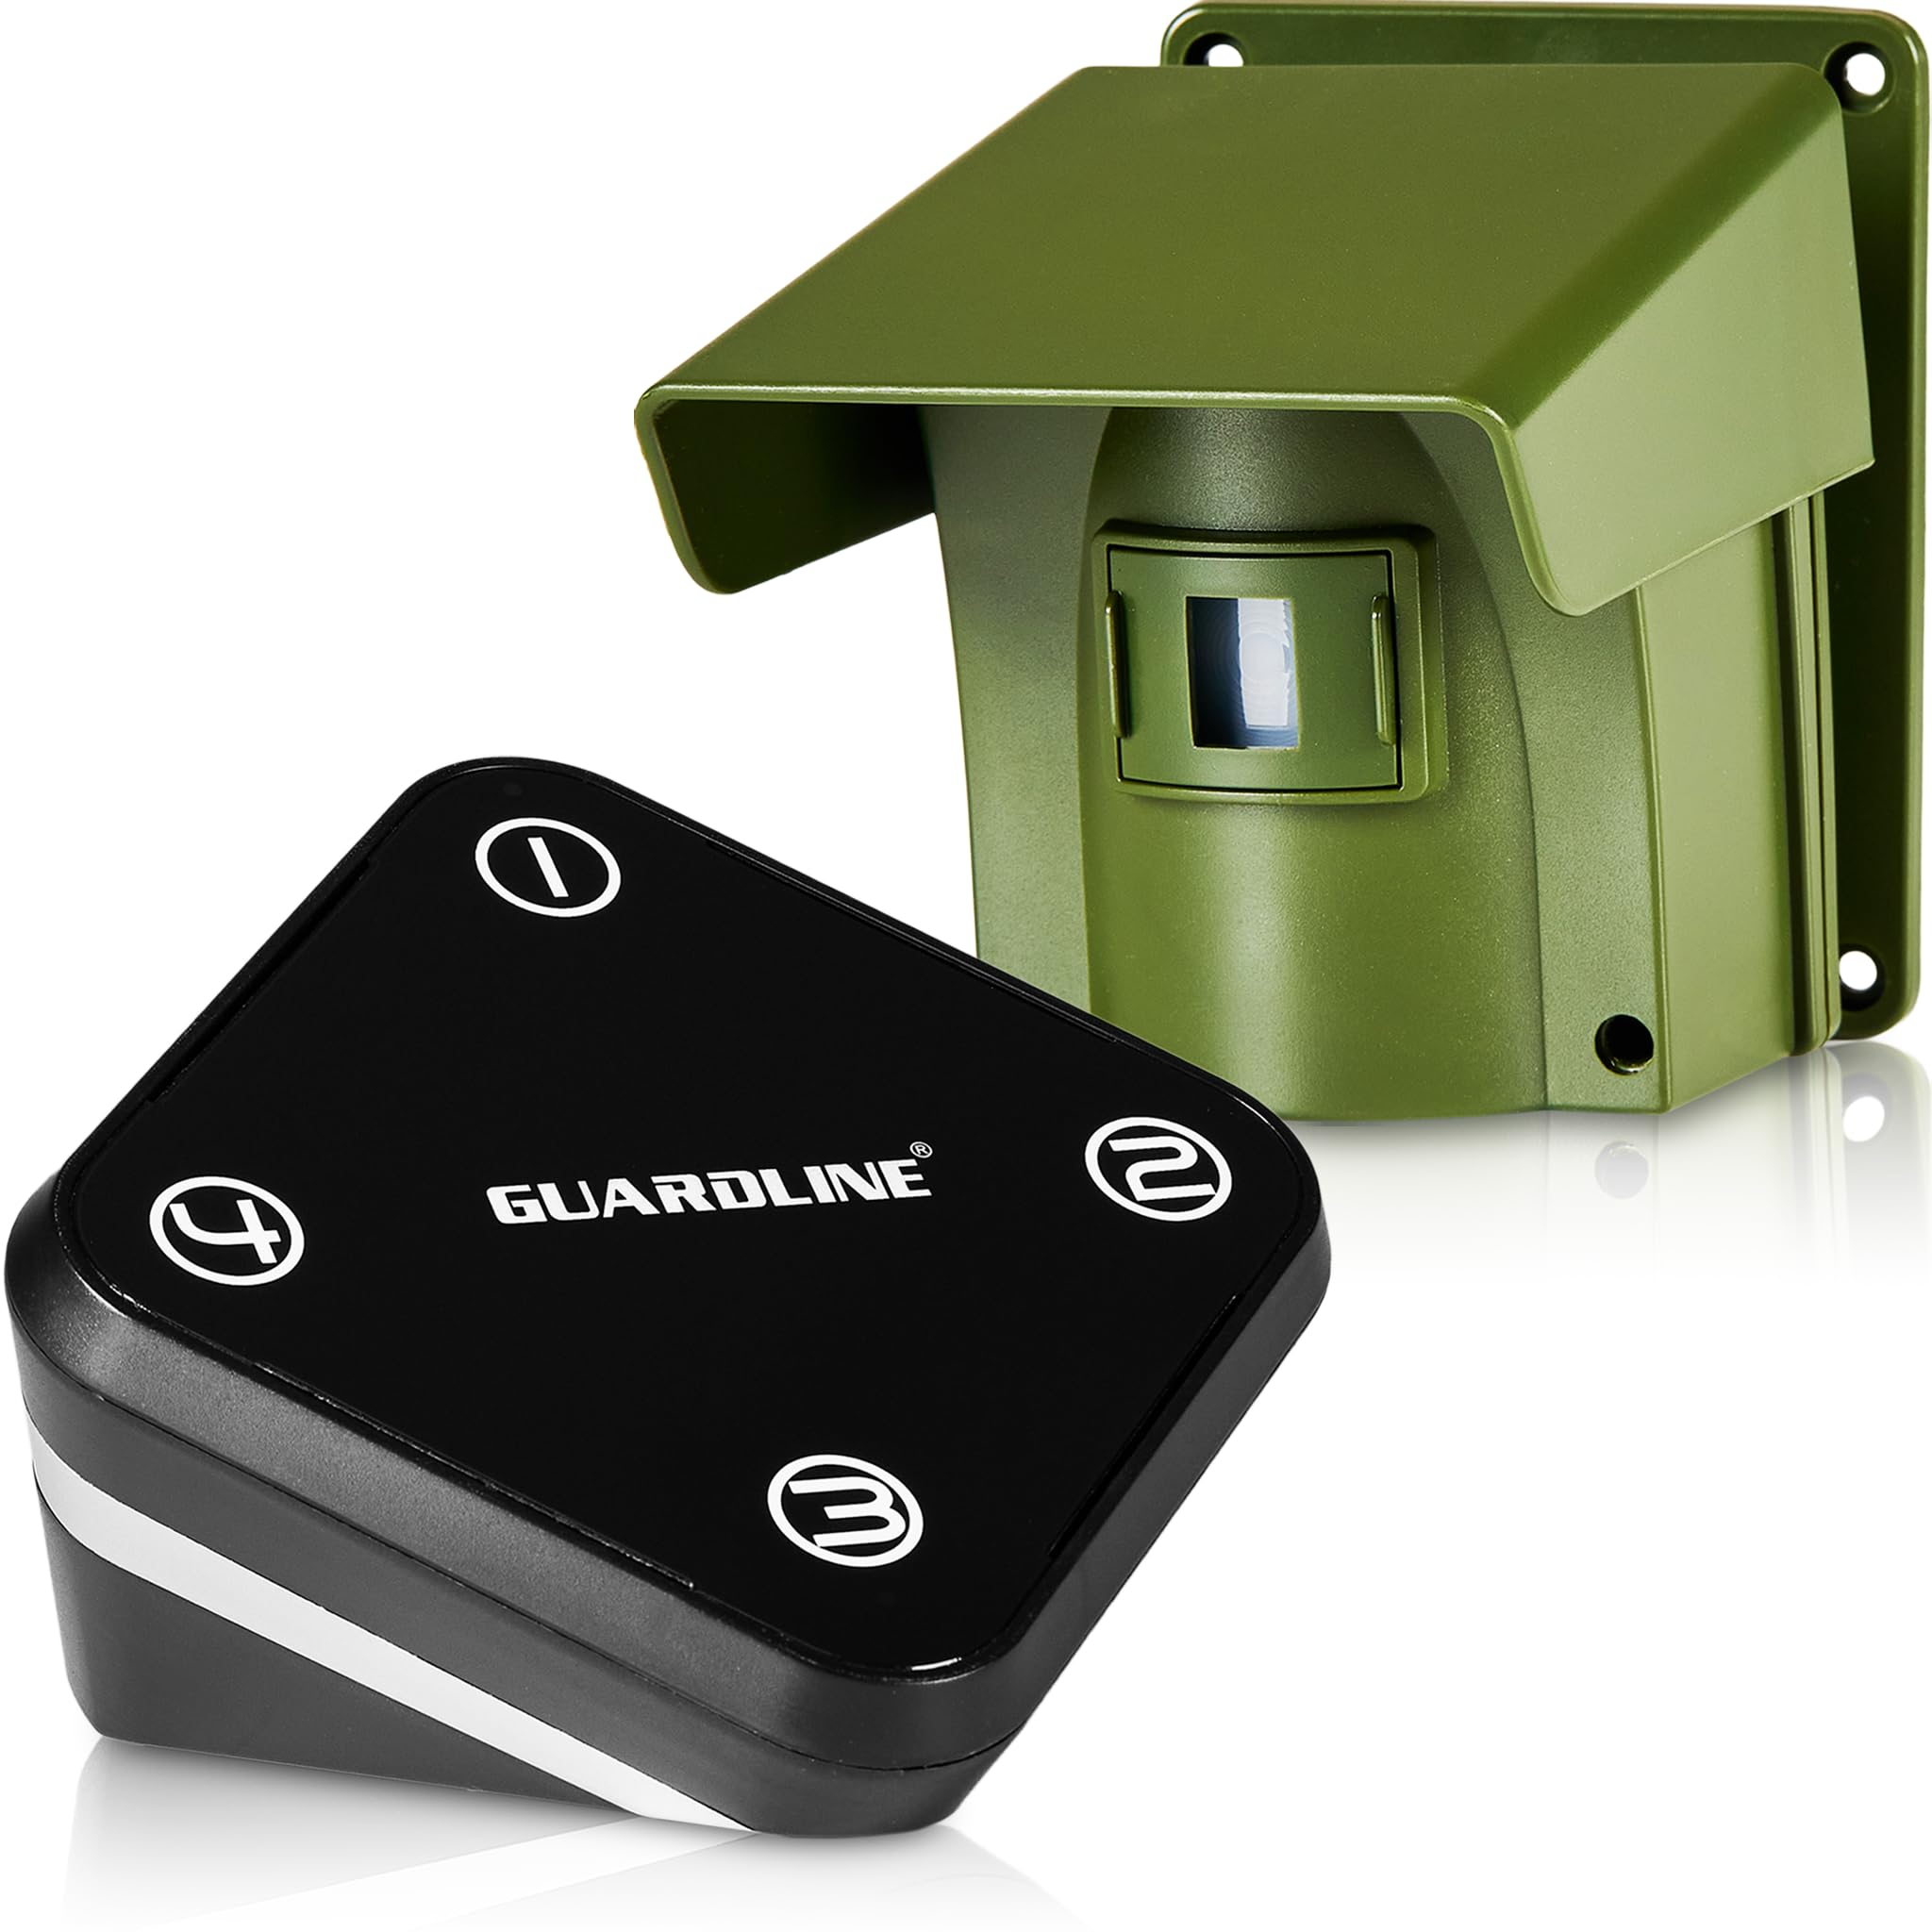 Guardline ワイヤレス私道アラーム - 1/4マイル範囲、家庭および財産用の耐候性屋外セキュリティ警報システム